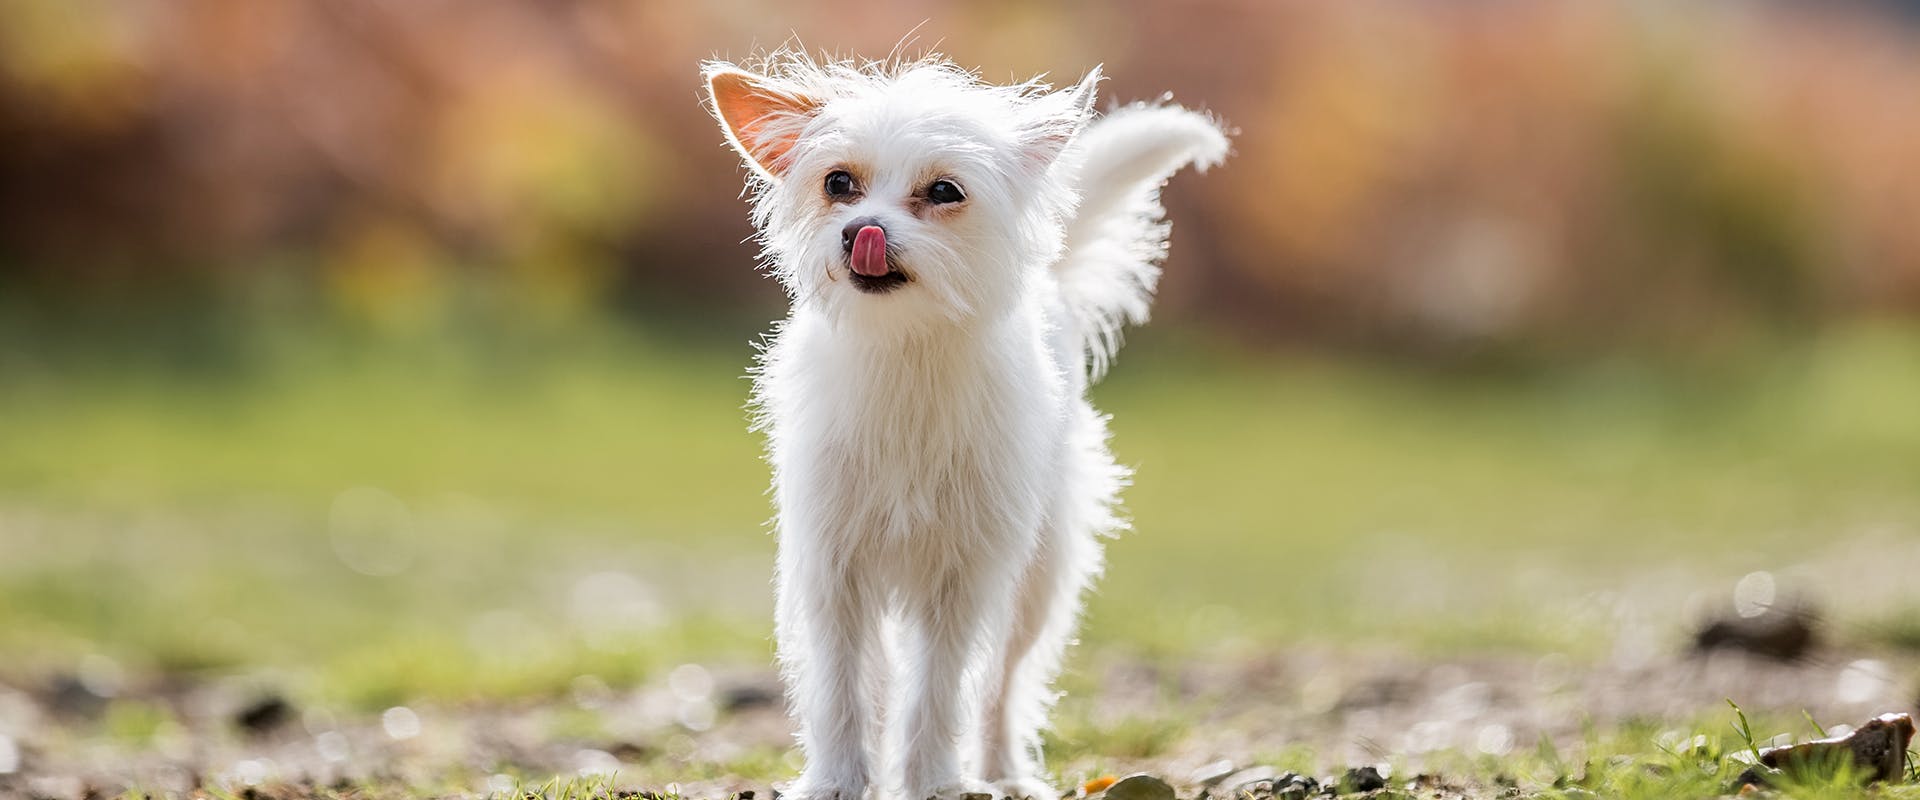 A small white Chorkie dog